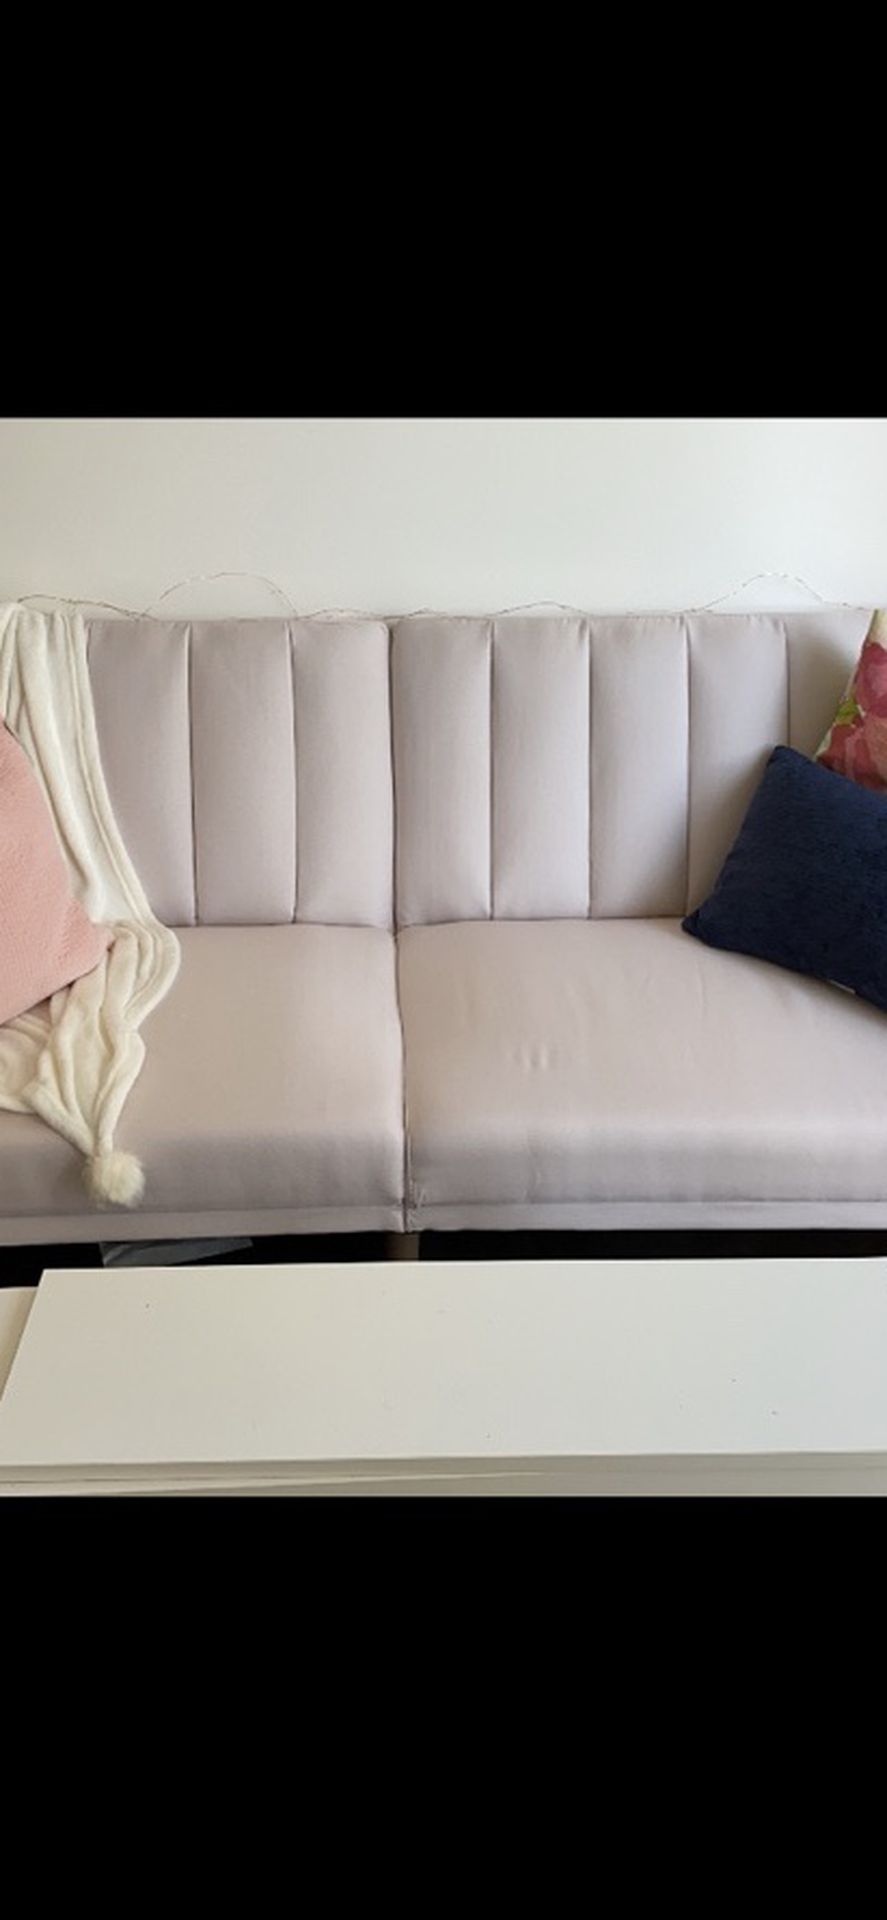 Sofa Futon - Premium Upholstery & Wooden Legs - Pink. $130 OBO